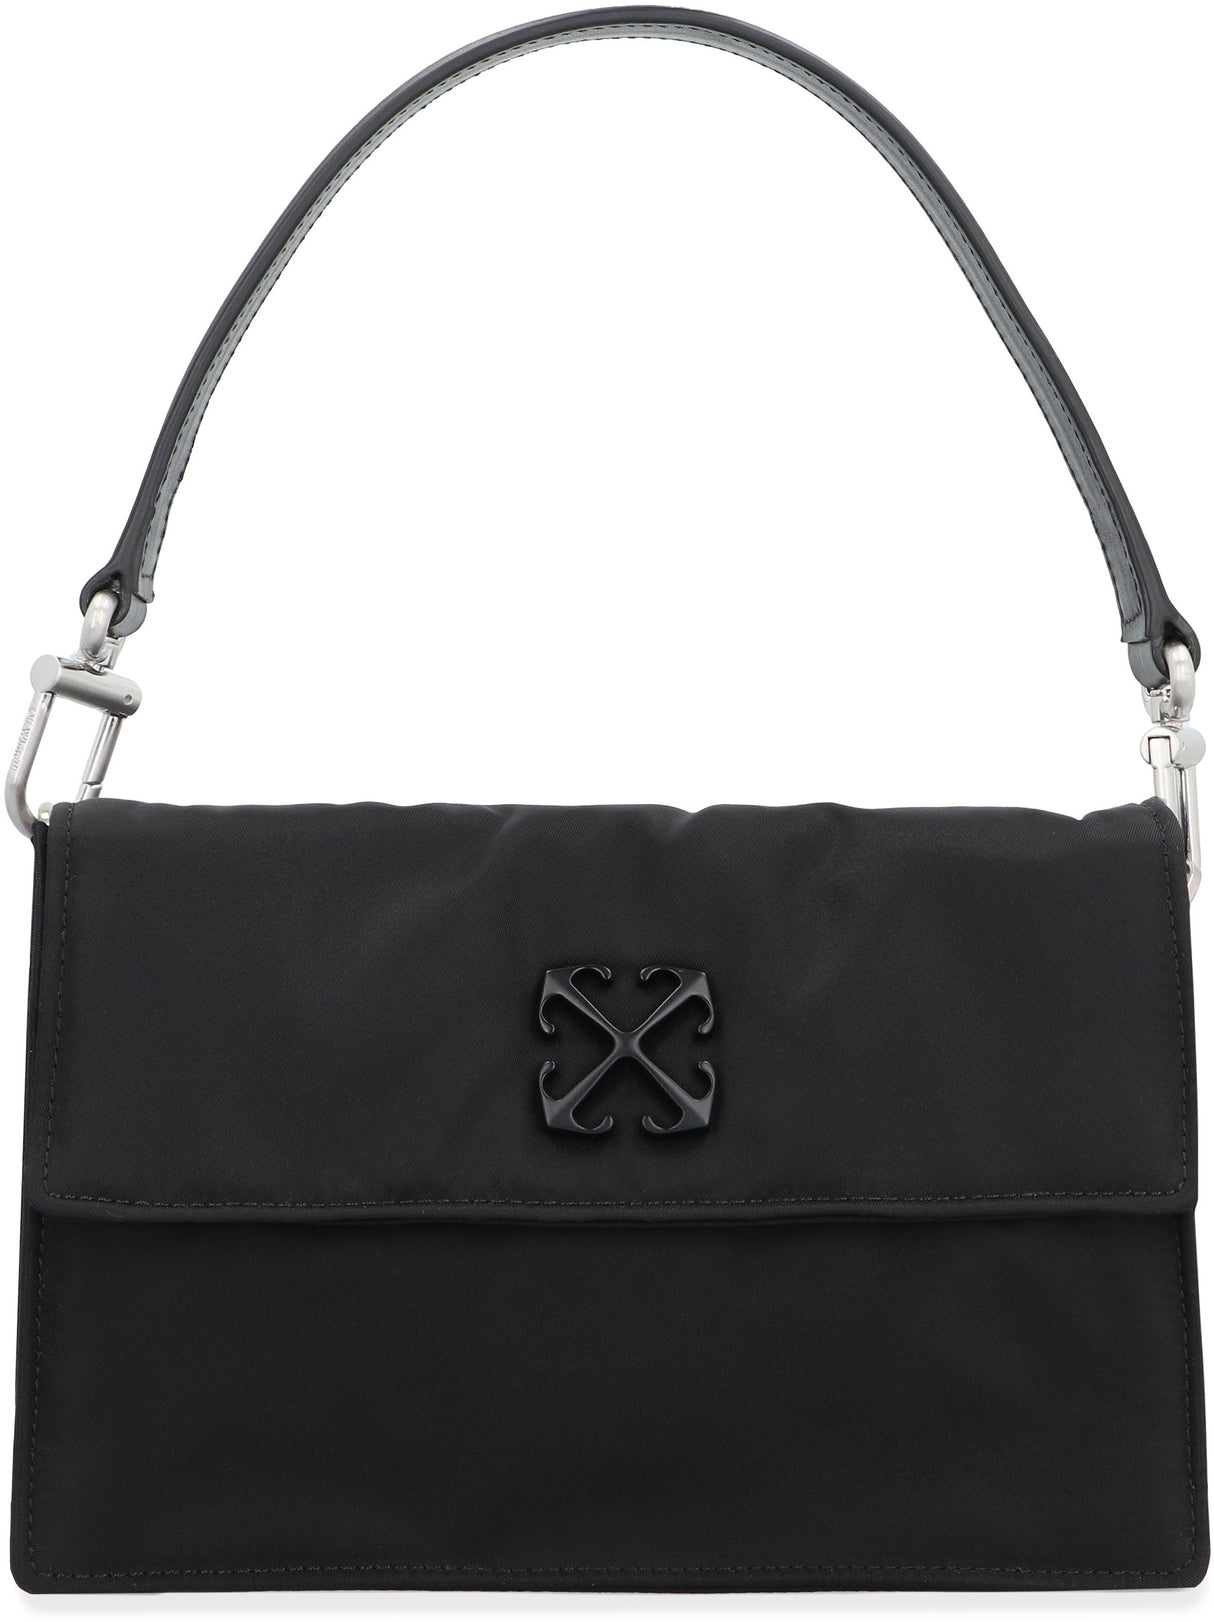 OFF-WHITE Fashionable Black Handbag - FW23 Collection for Women